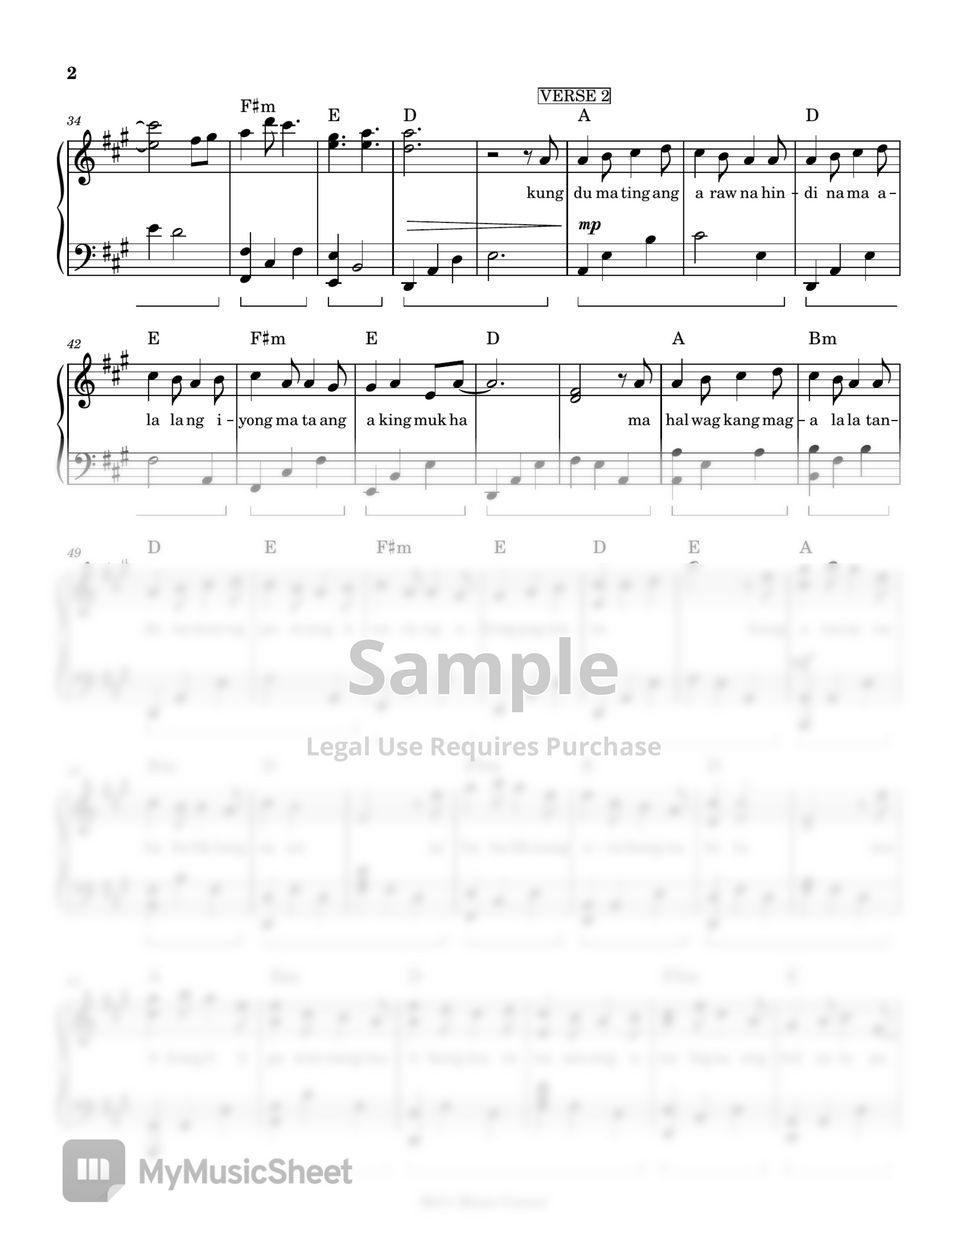 Dionela - Musika (piano sheet music) by Mel's Music Corner